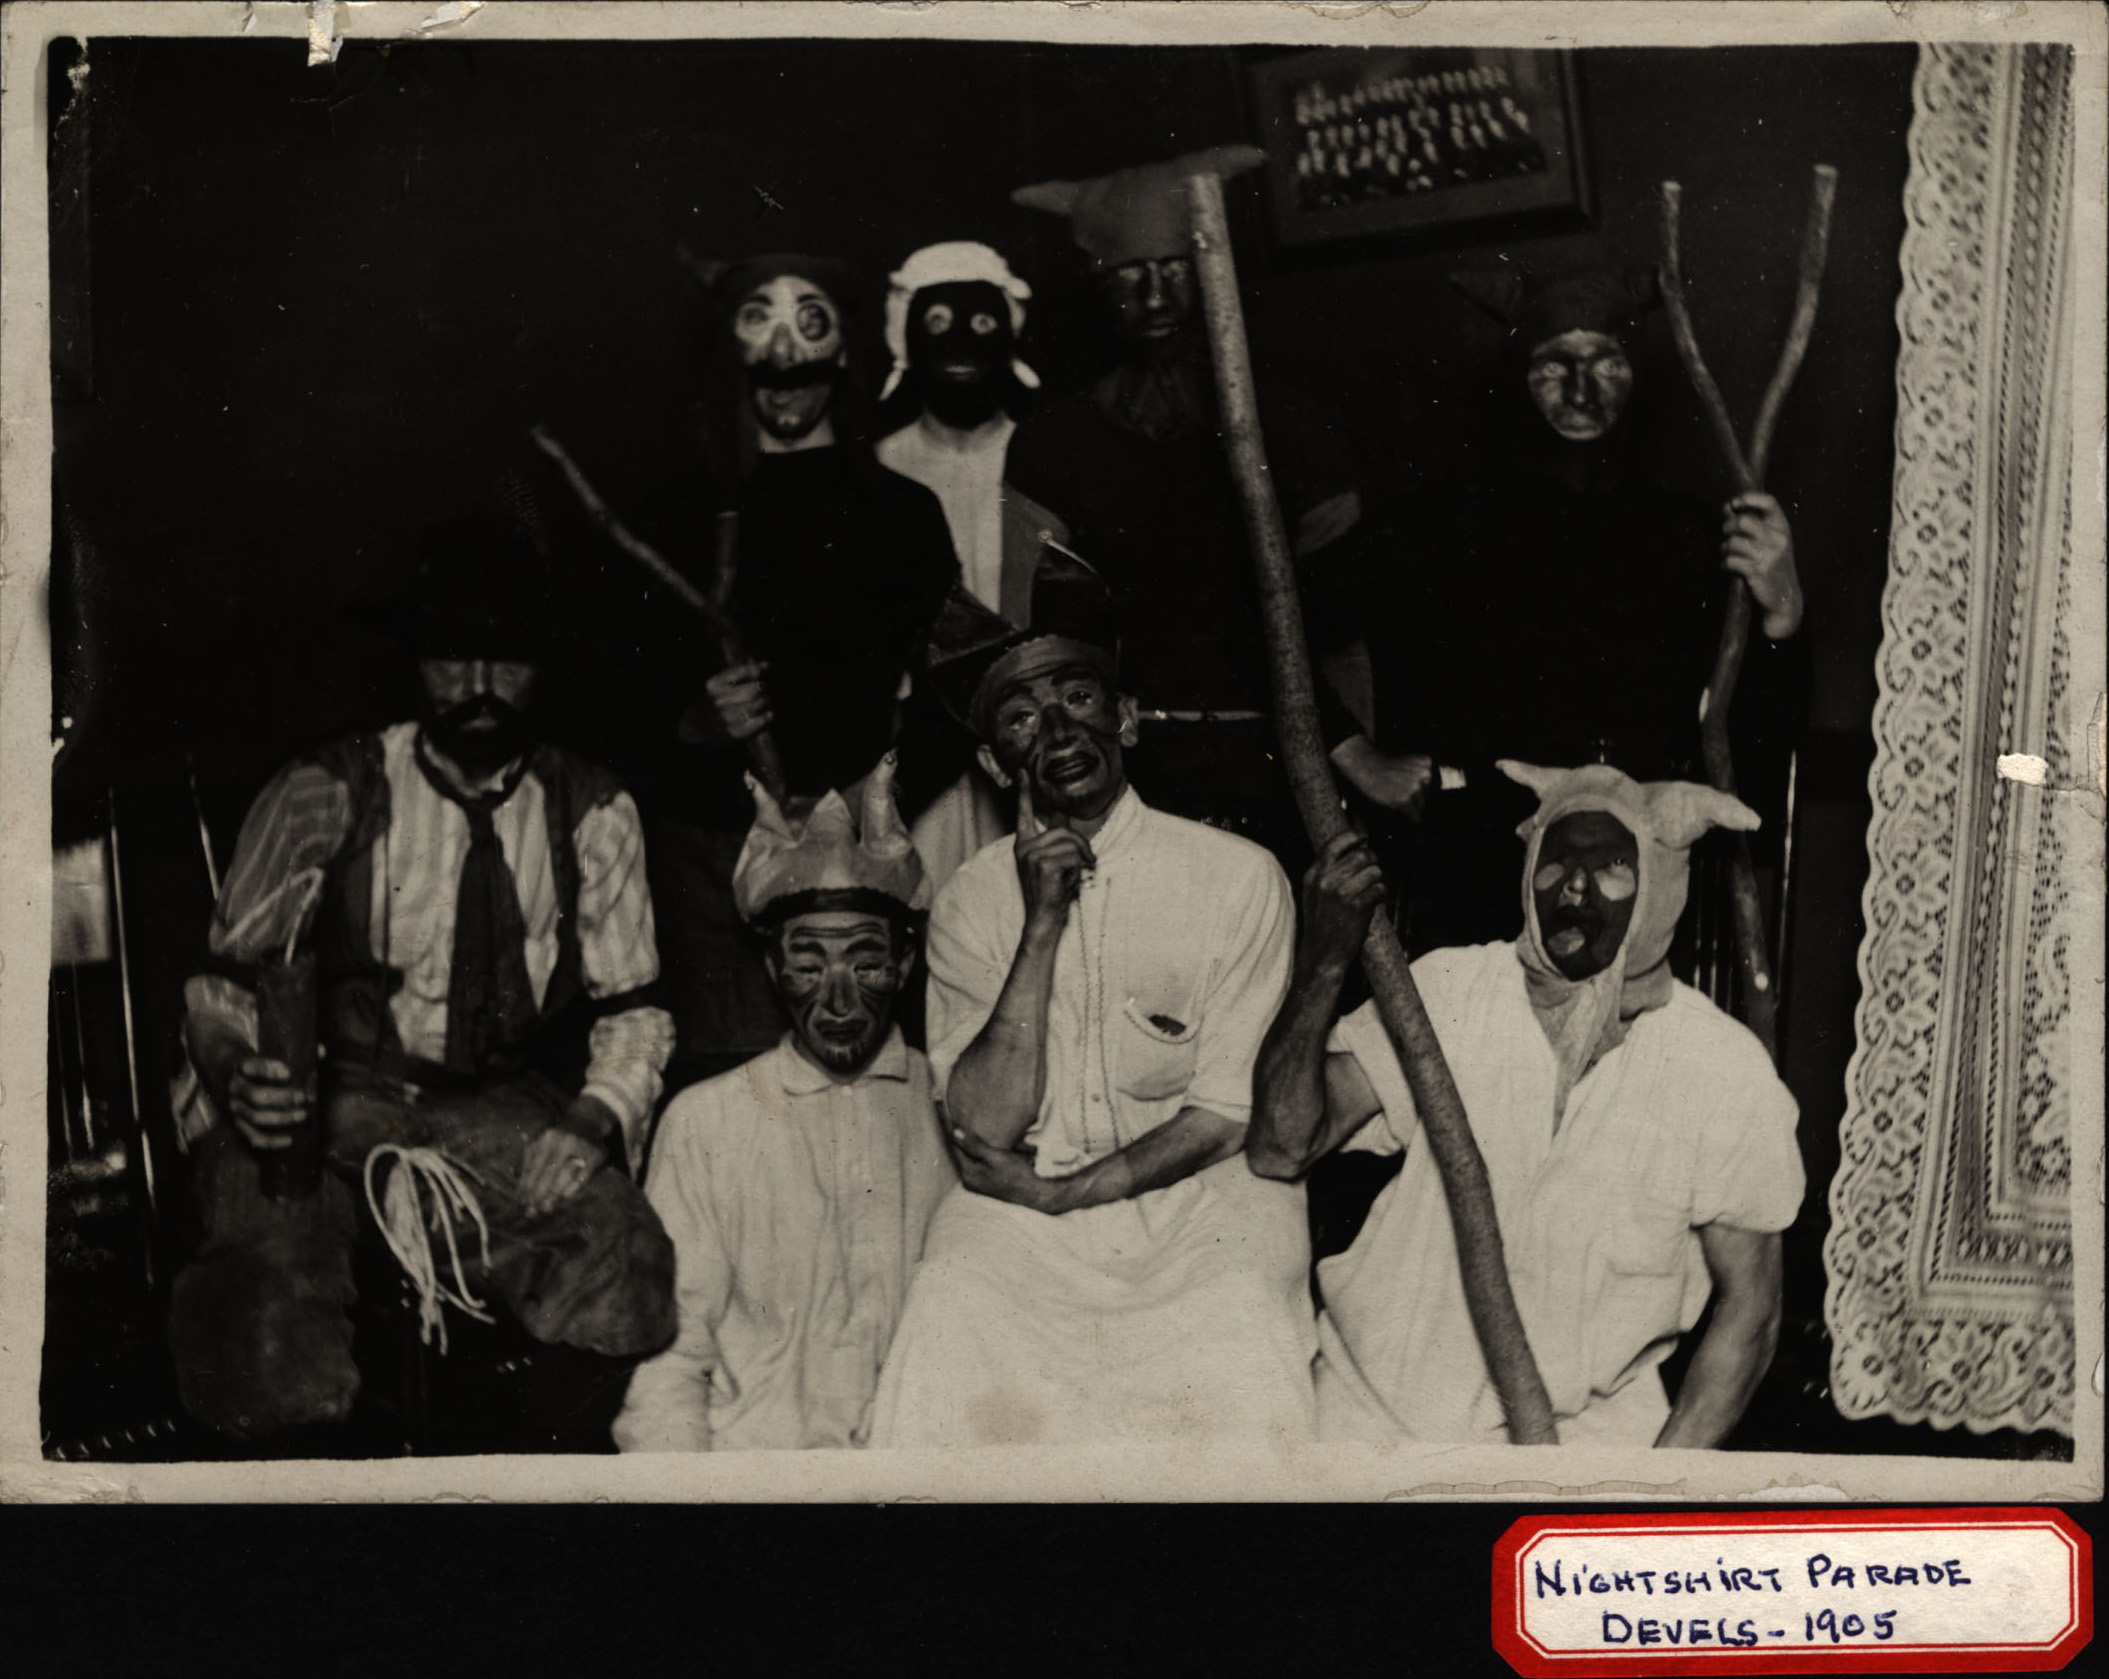 Nightshirt Parade Devils, 1905